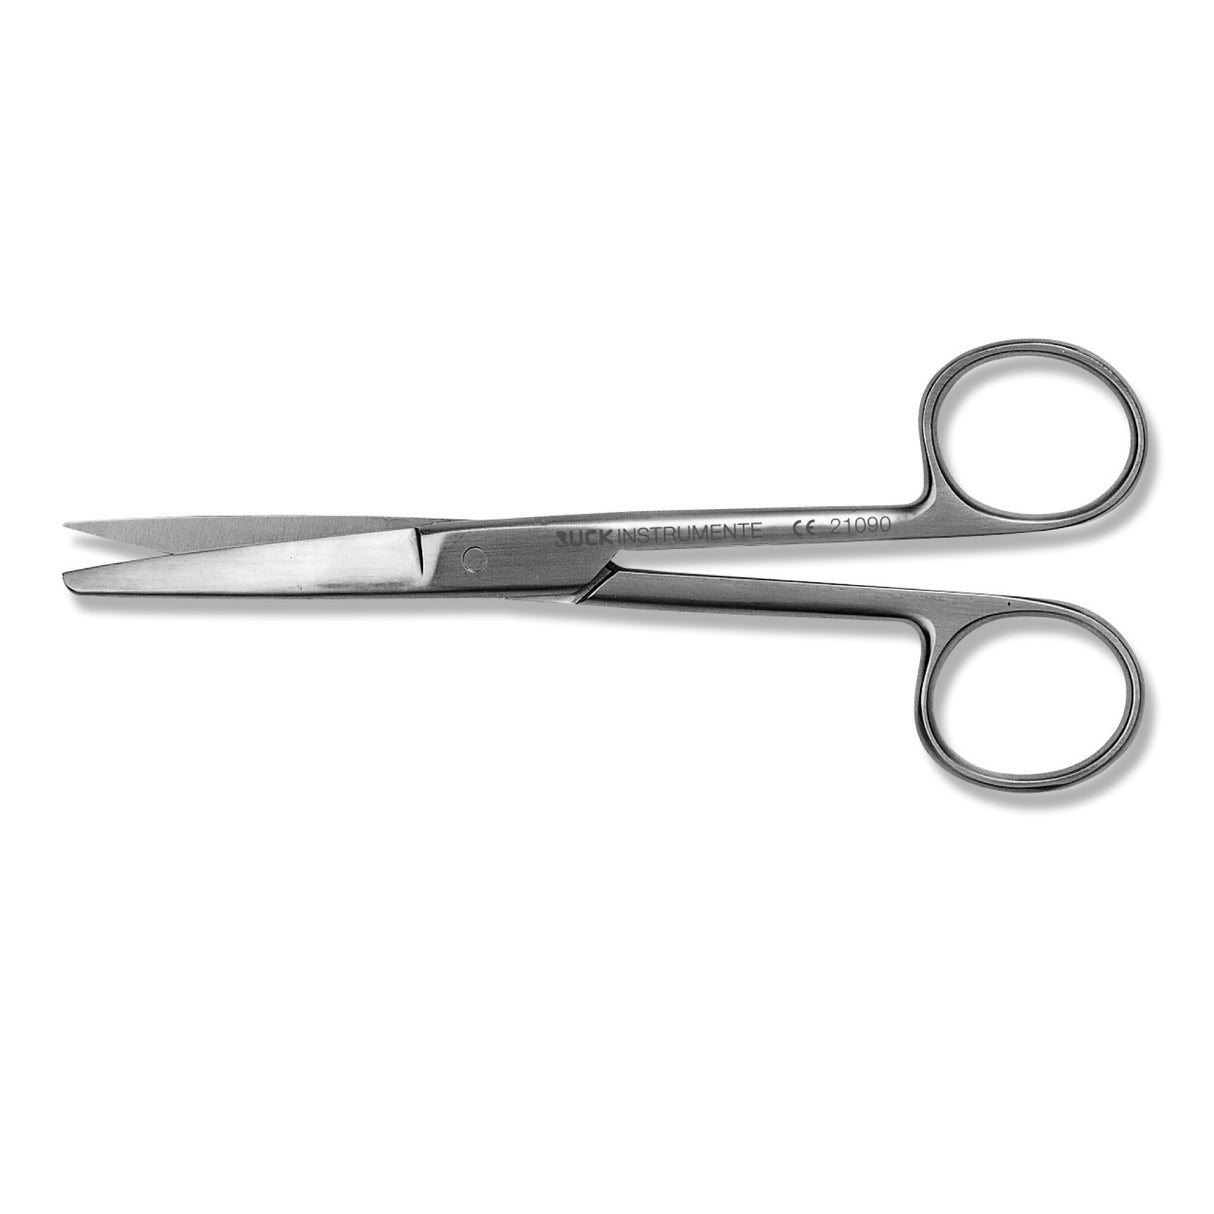 Bandage scissors | Hardened steel 14.5cm